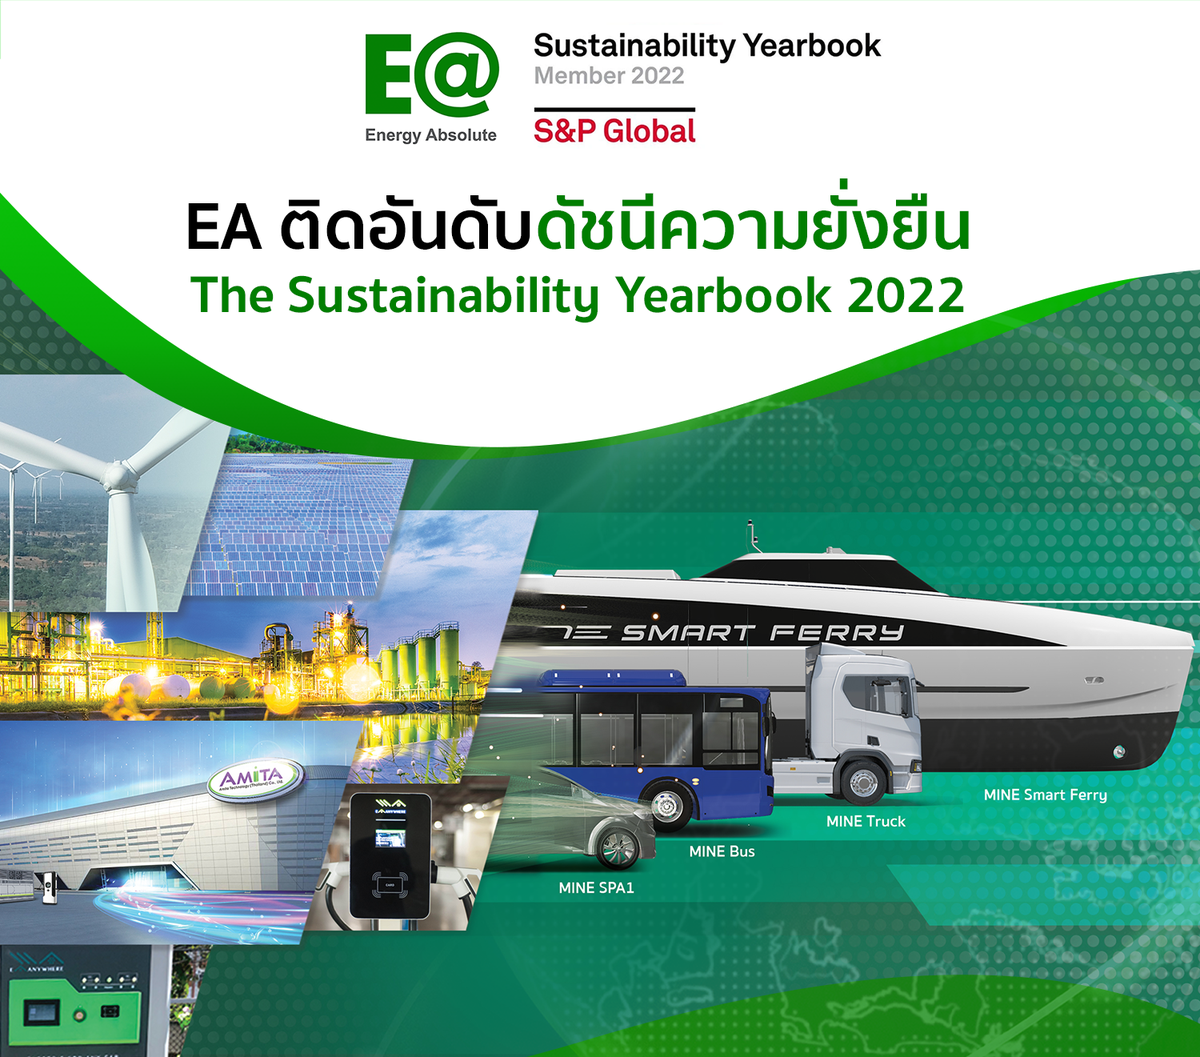 EA ปลื้ม! ติดอันดับดัชนีความยั่งยืนระดับสากล The Sustainability Yearbook 2022 ระดับ Member จาก SP Global